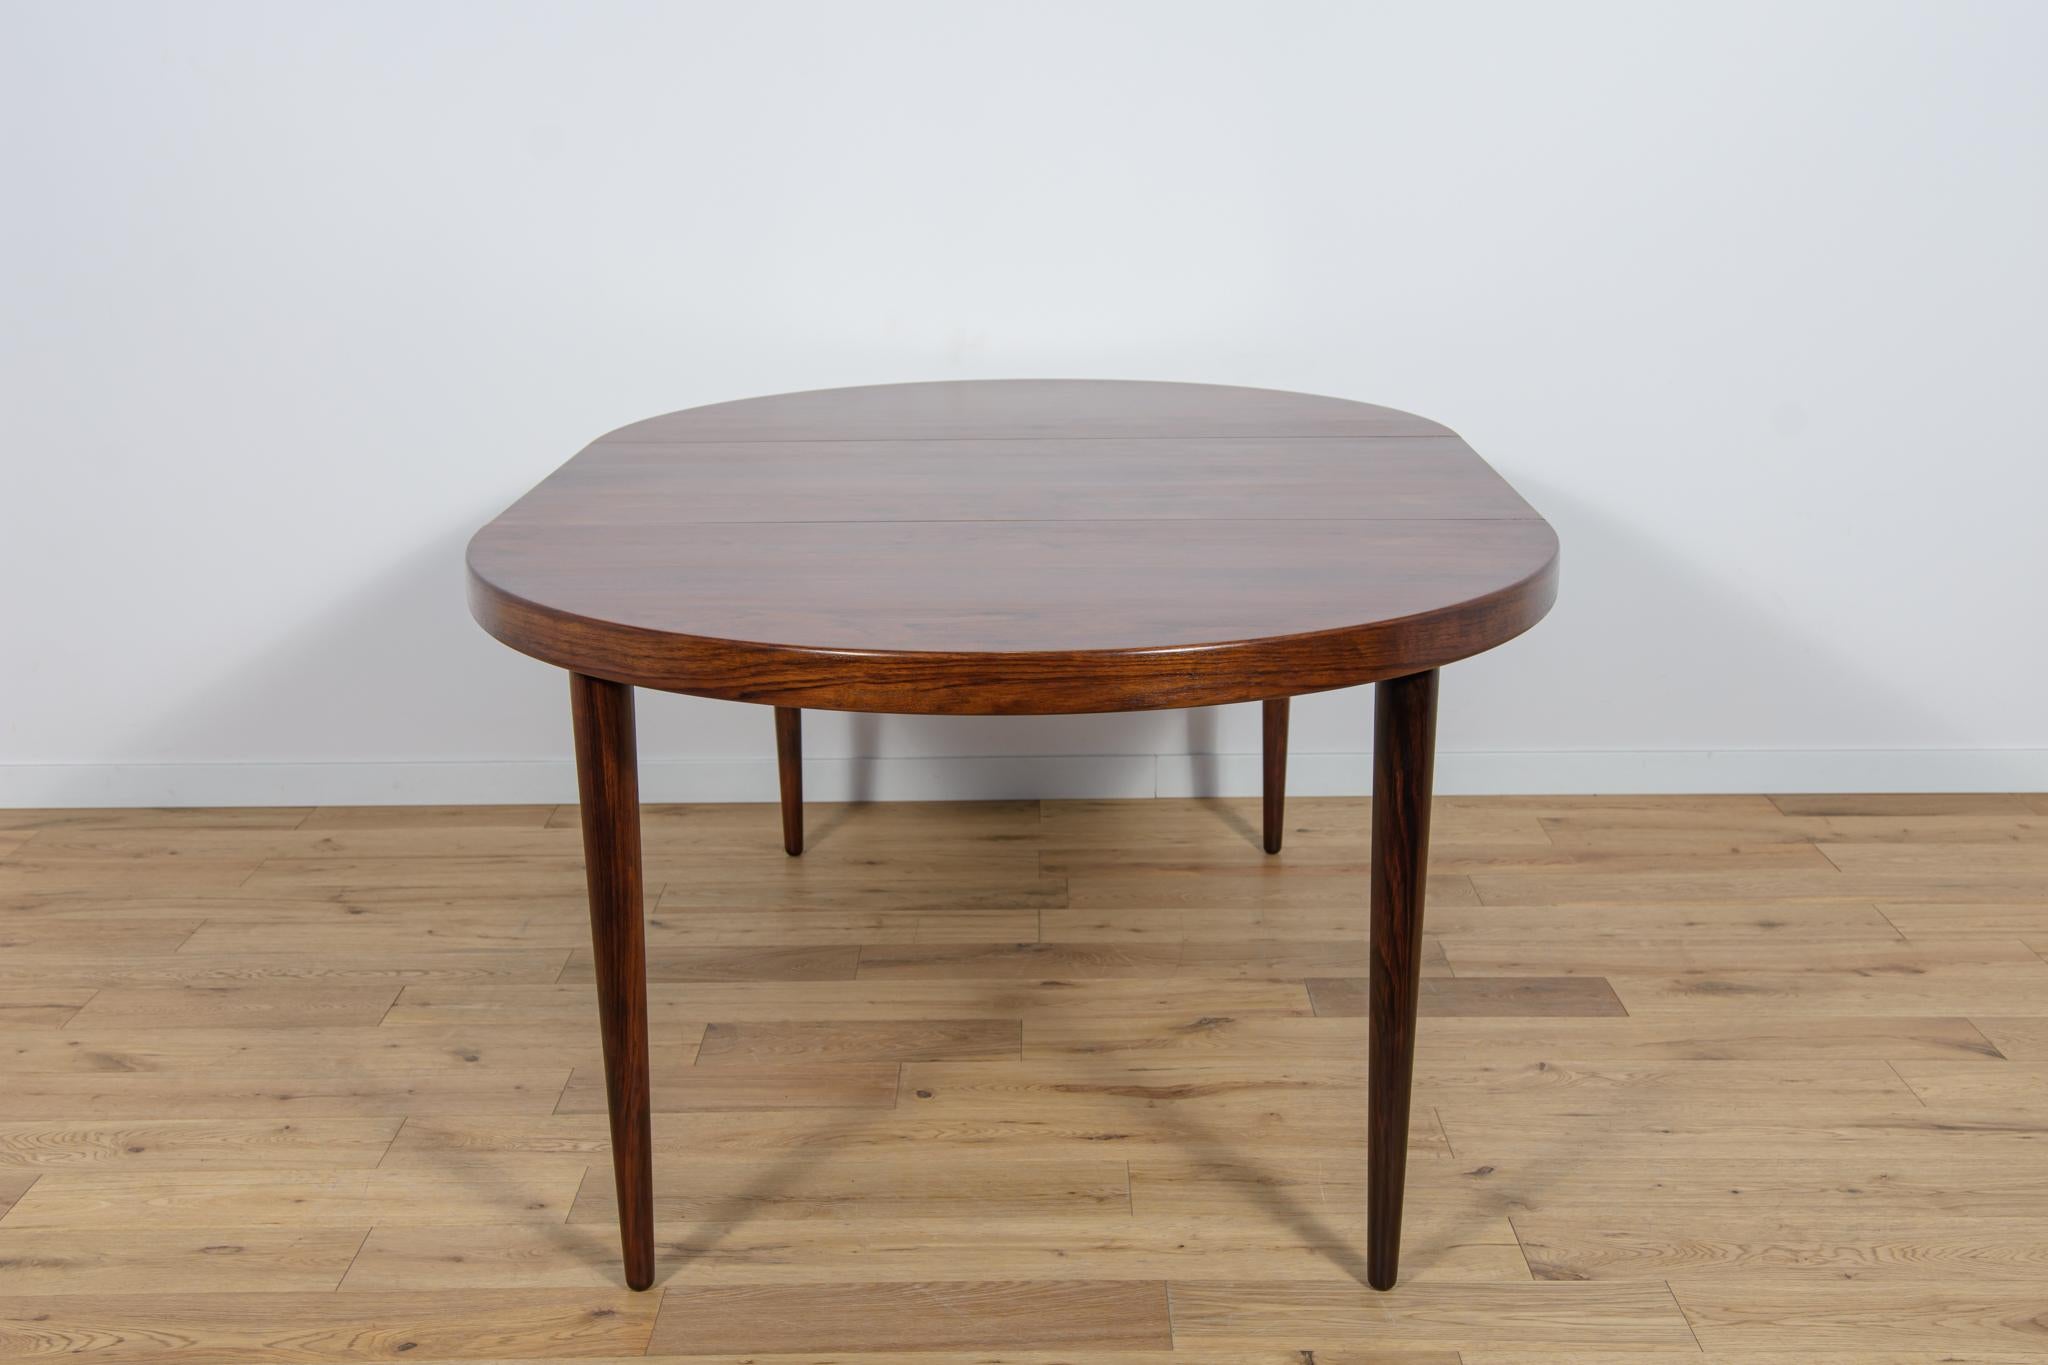  Mid-Century Extendable Rosewood Dining Table by Kai Kristiansen for Feldballes  For Sale 5